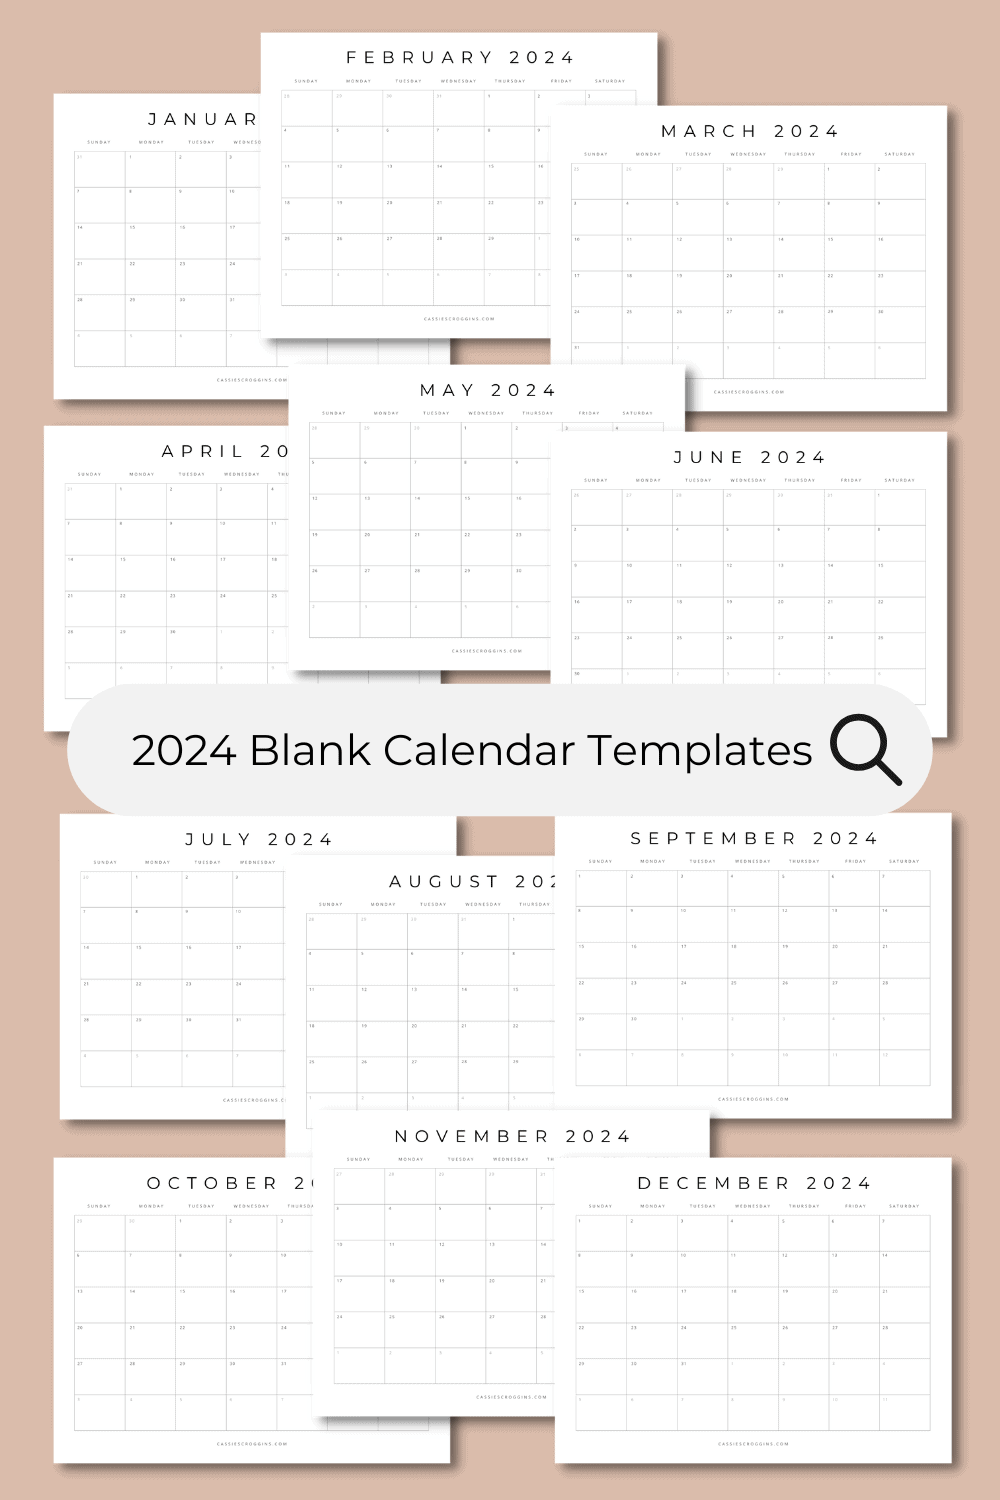 Free Printable 2024 Blank Calendar Templates (All 12 Months) pertaining to Free Printable Calendar 2024 Fill In